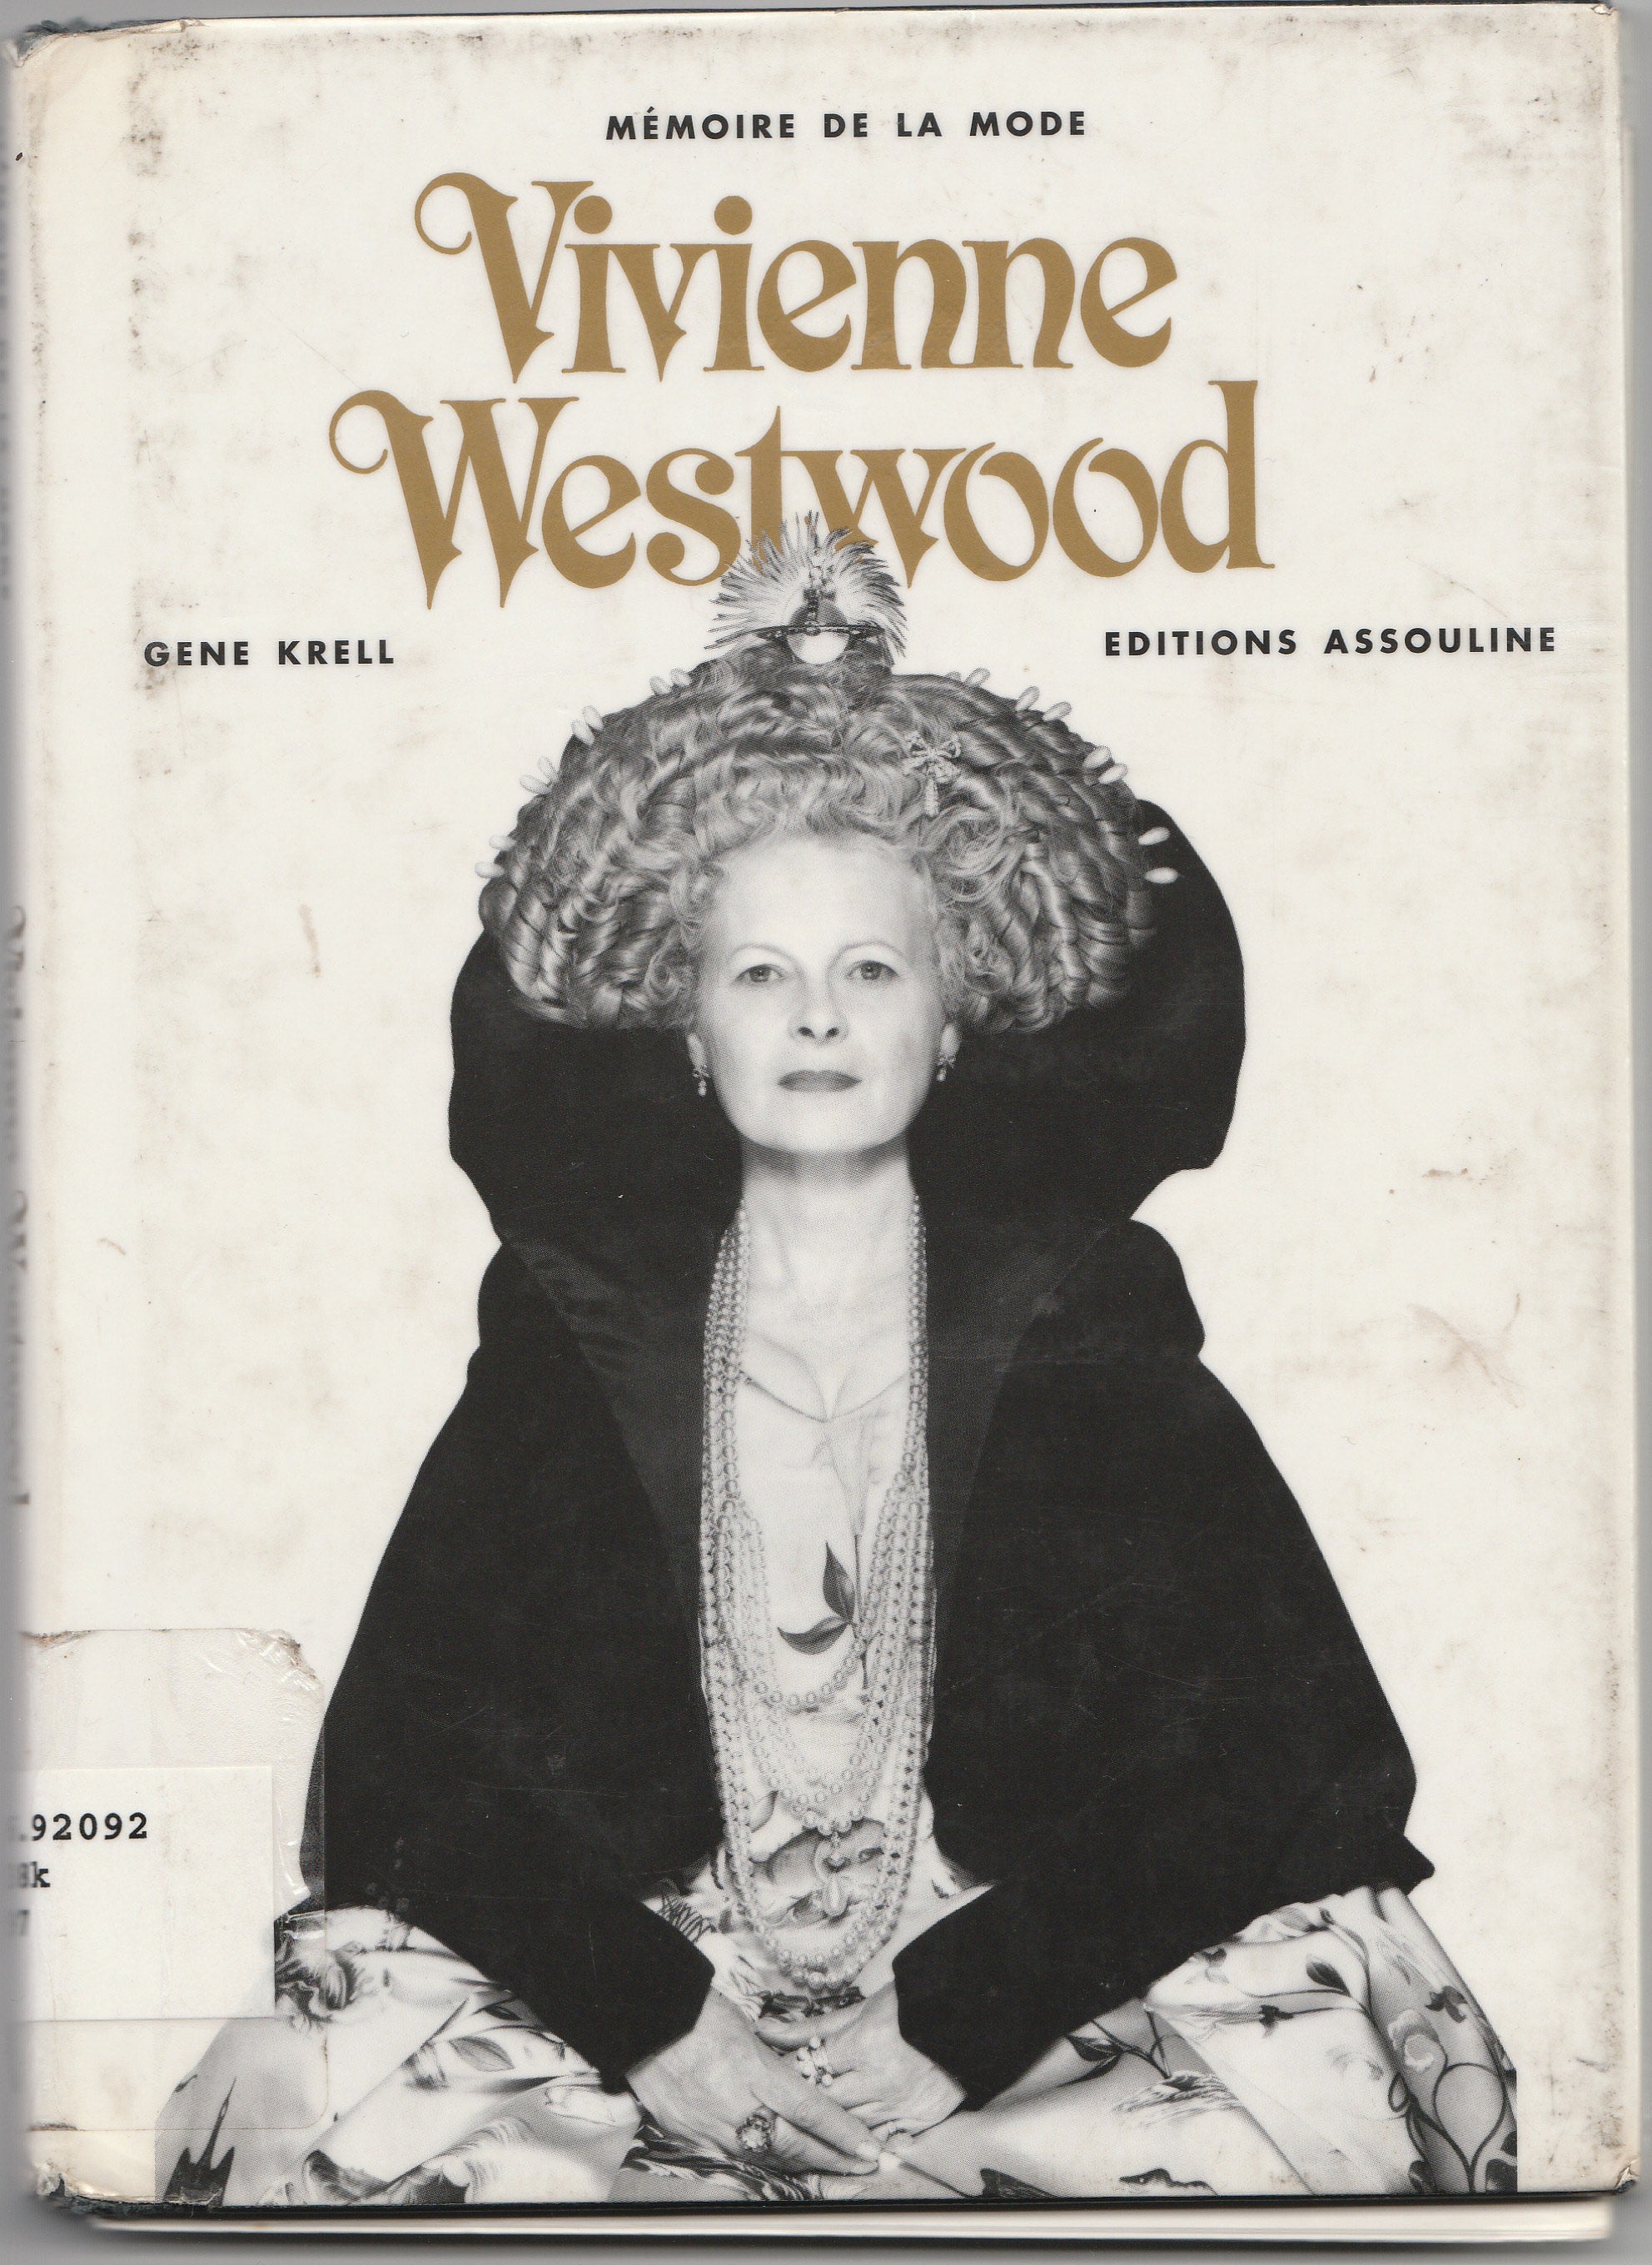 Vivienne Westwood ‘Mémoire de la mode’ by Gene Krell (1997)